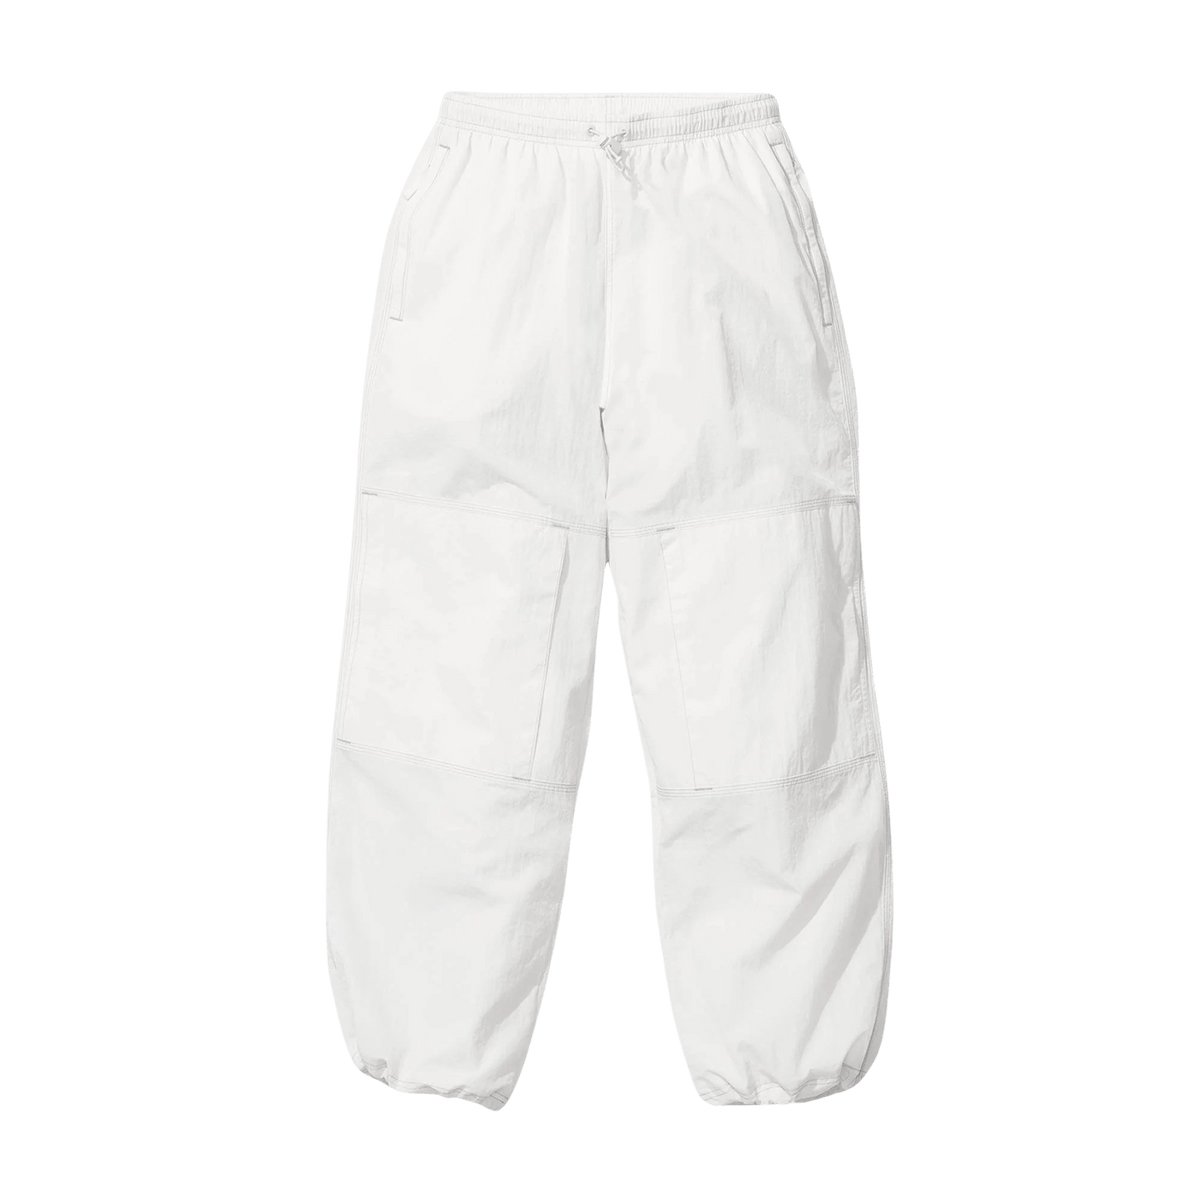 Supreme x Nike Track Pants 'White' - Kick Game